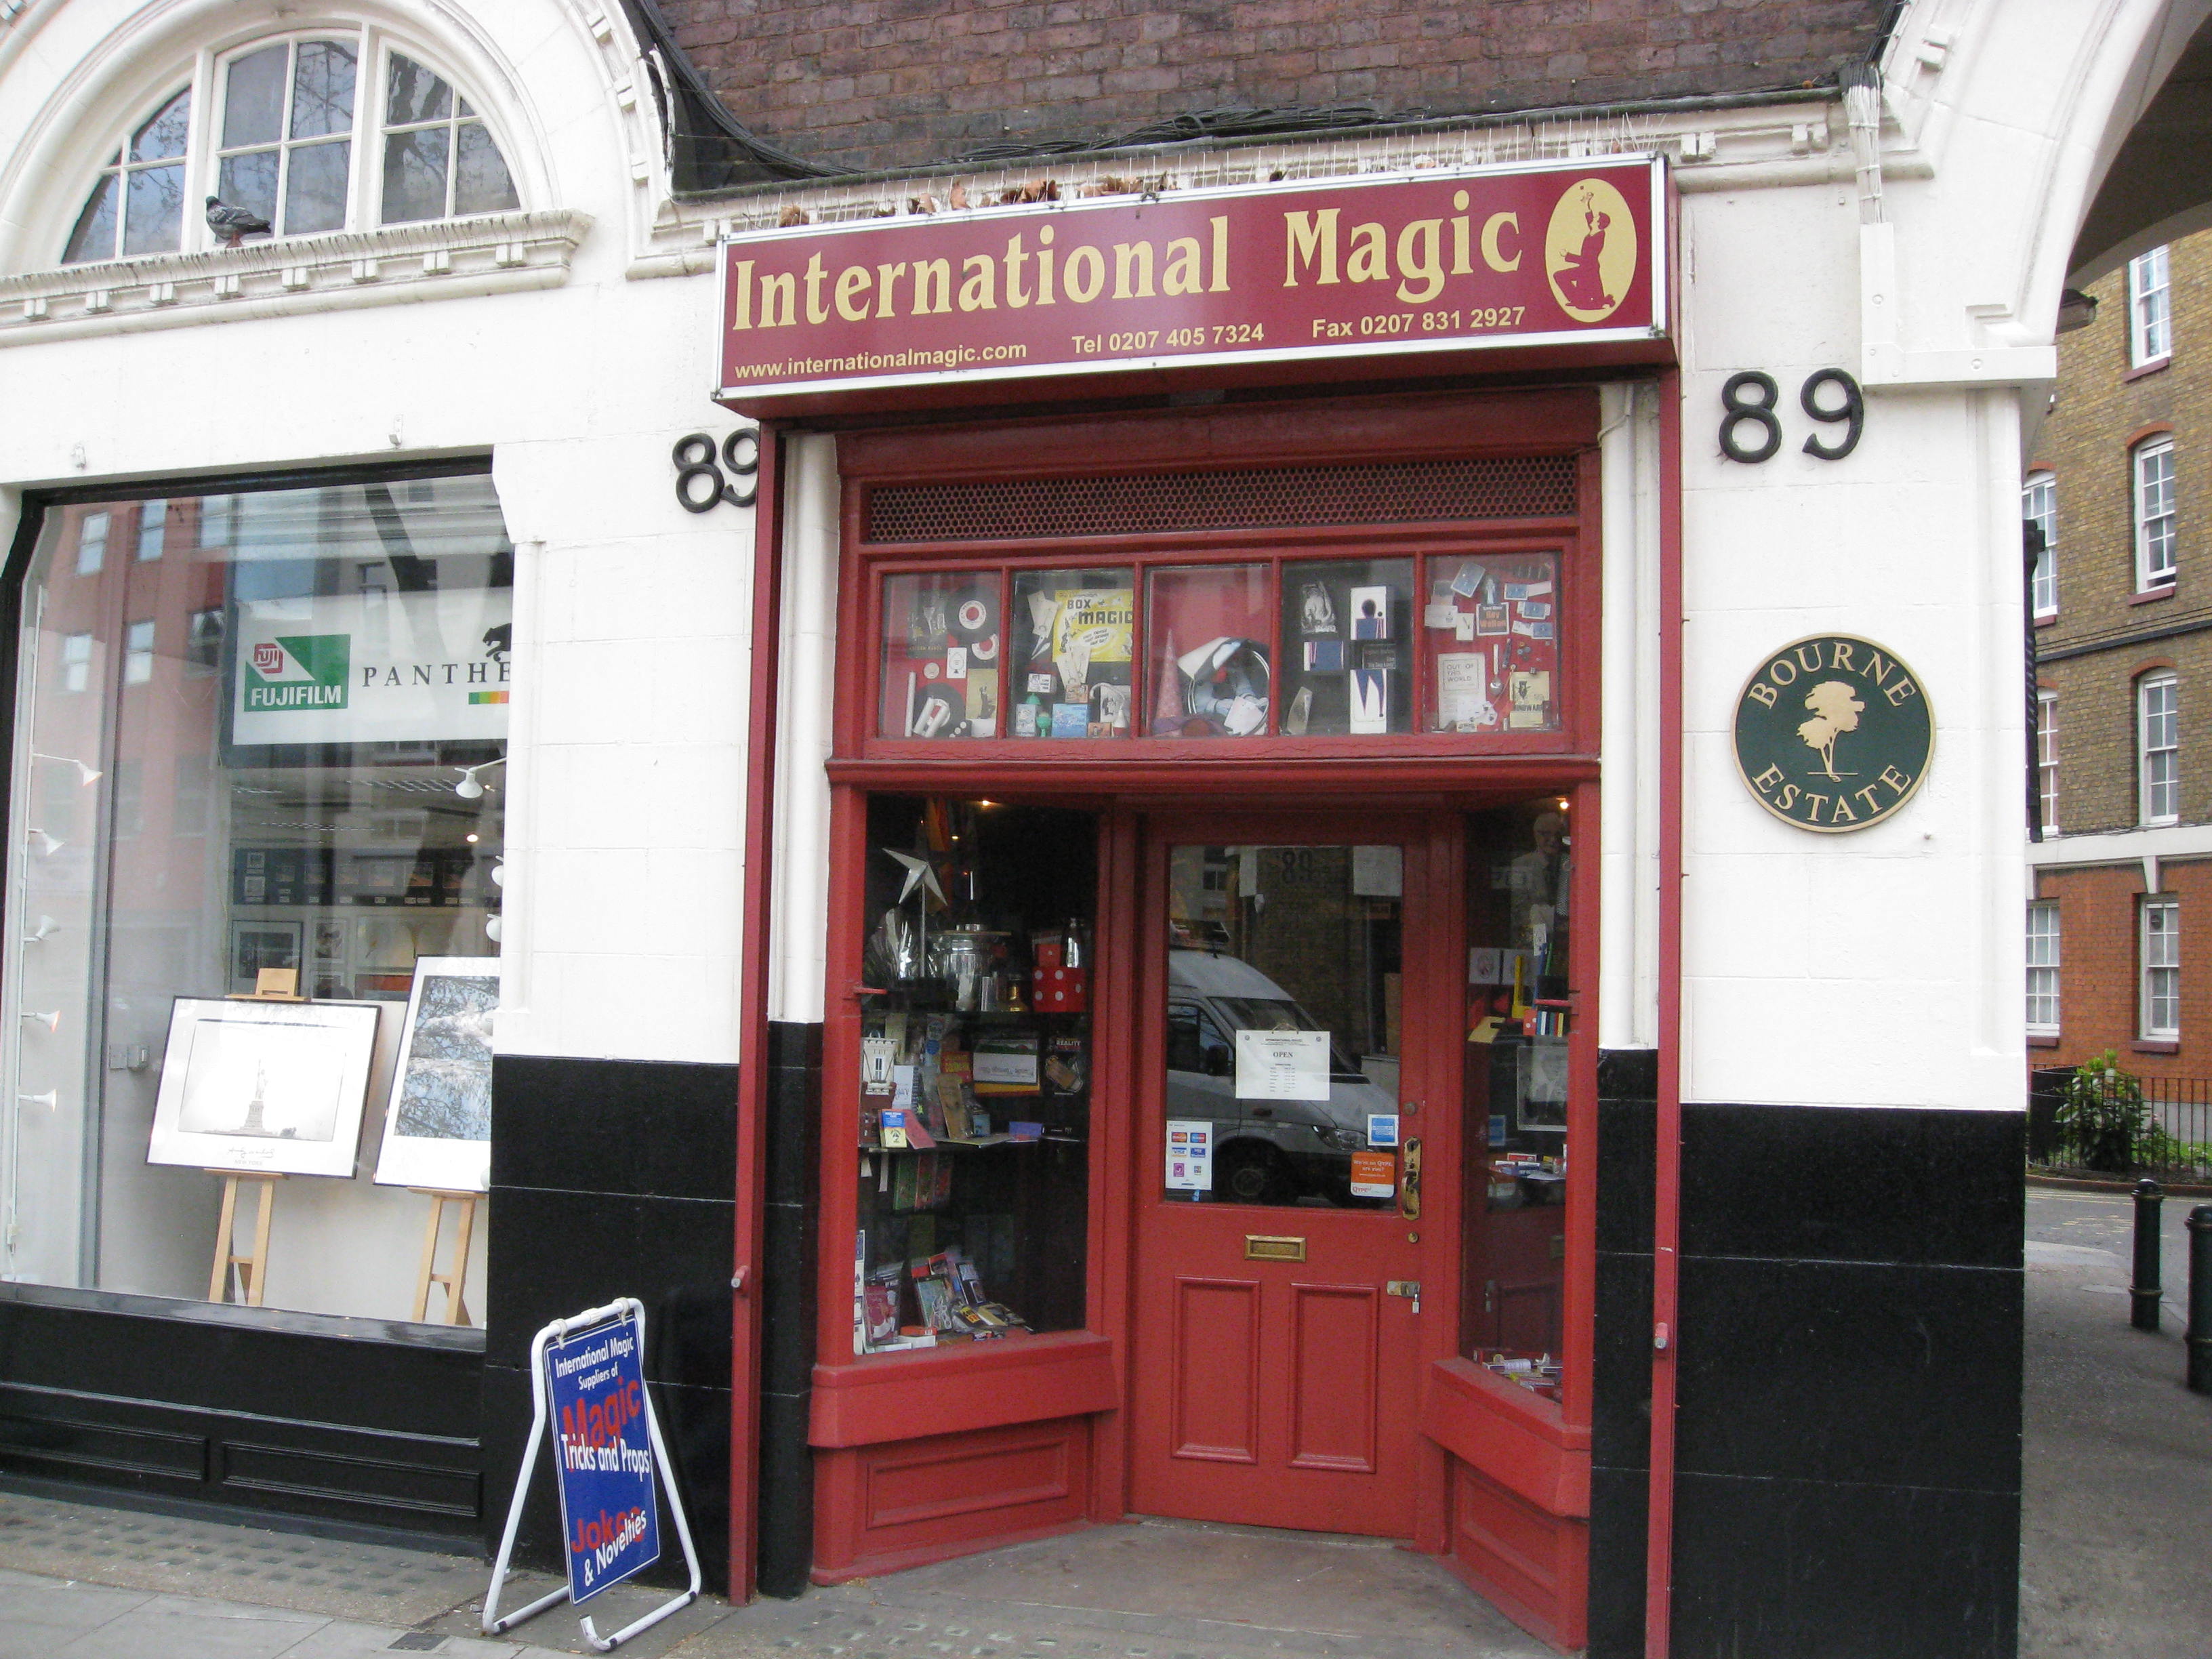 International Magic Studio London